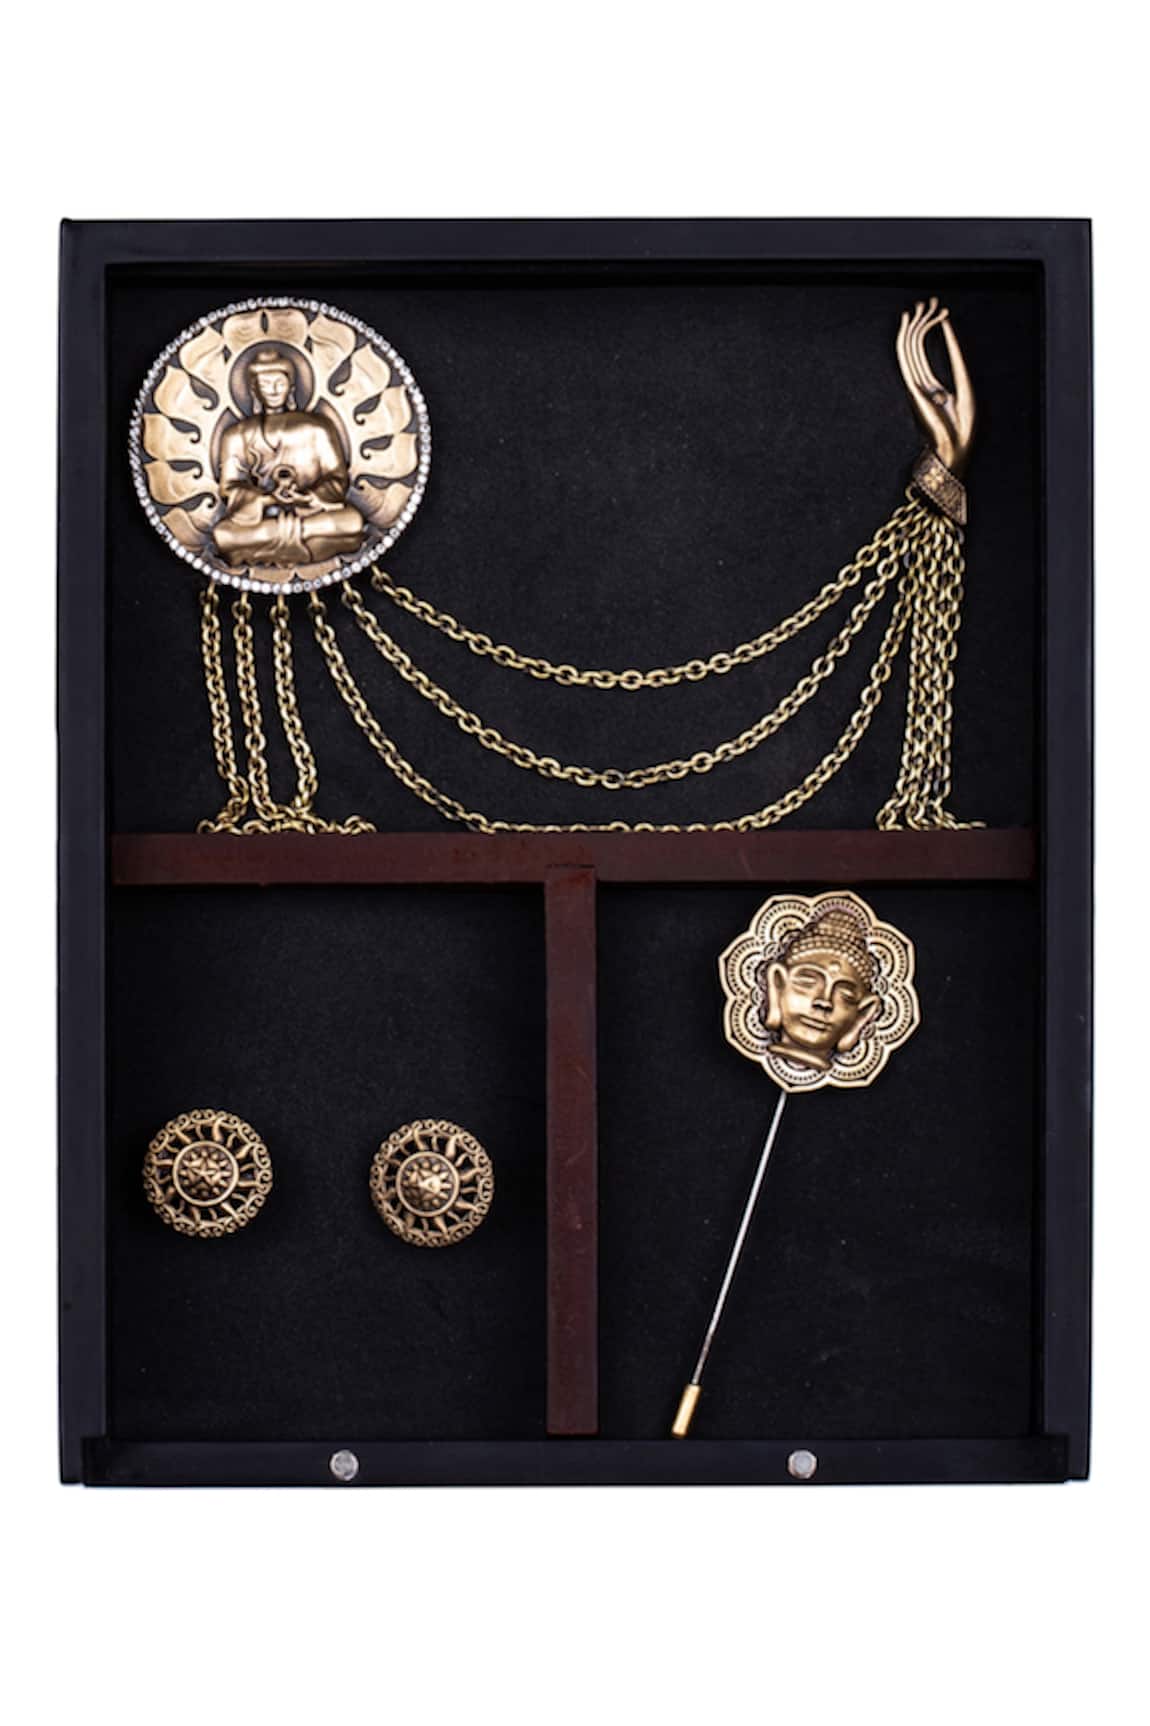 Cosa Nostraa Buddha Myth Cufflink Brooch & Lapel Pin Set